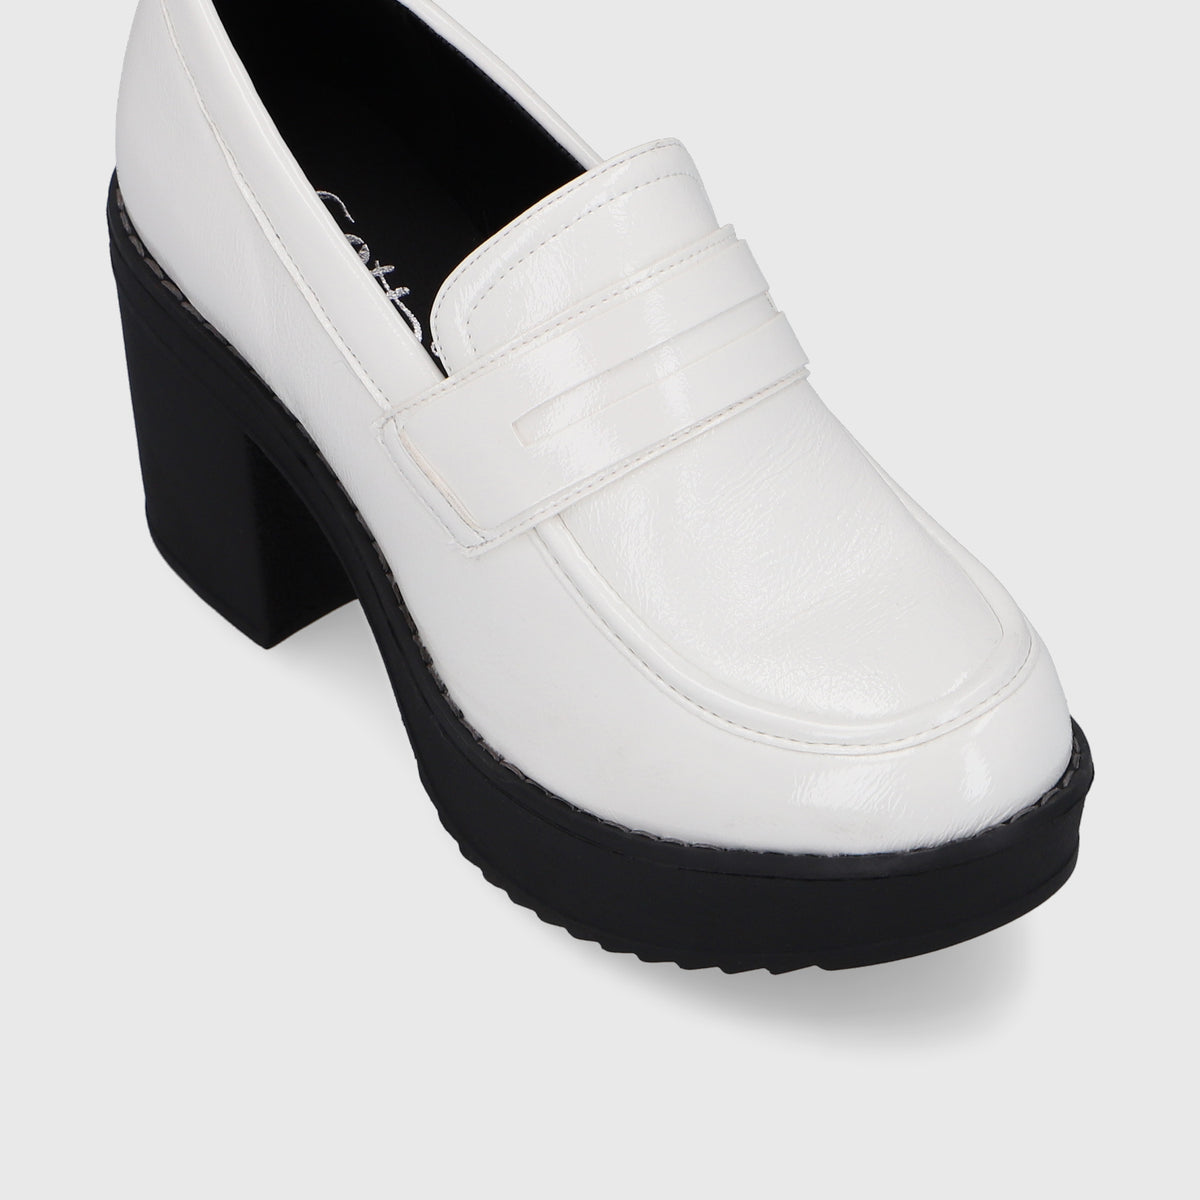 Zapato Blanco Charol Mujer 13503